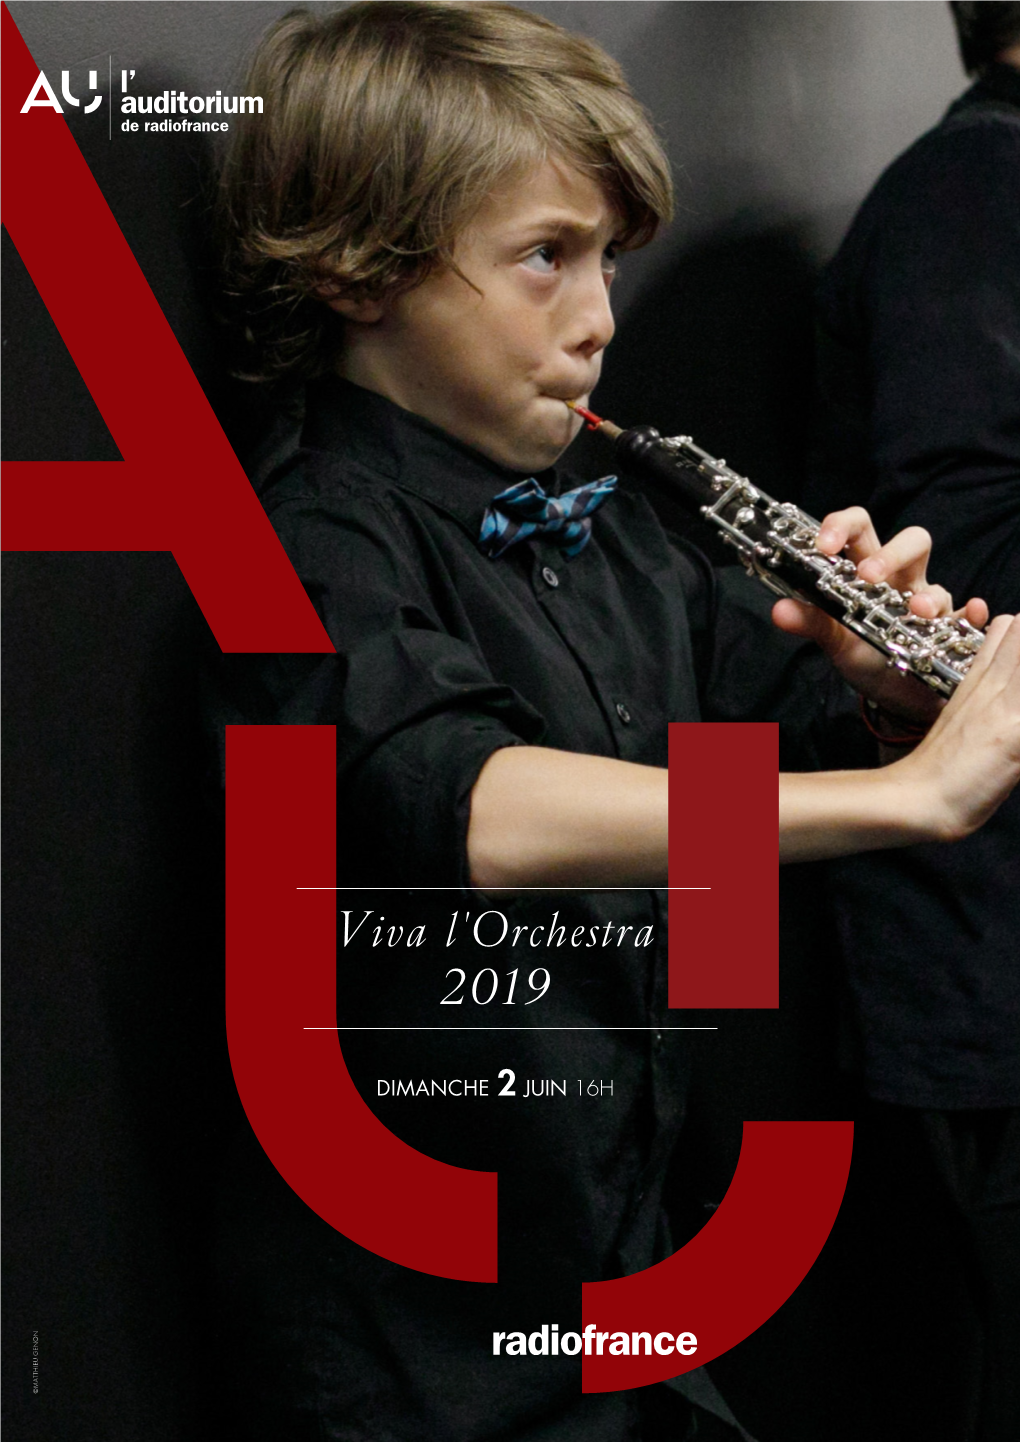 Viva L'orchestra 2019